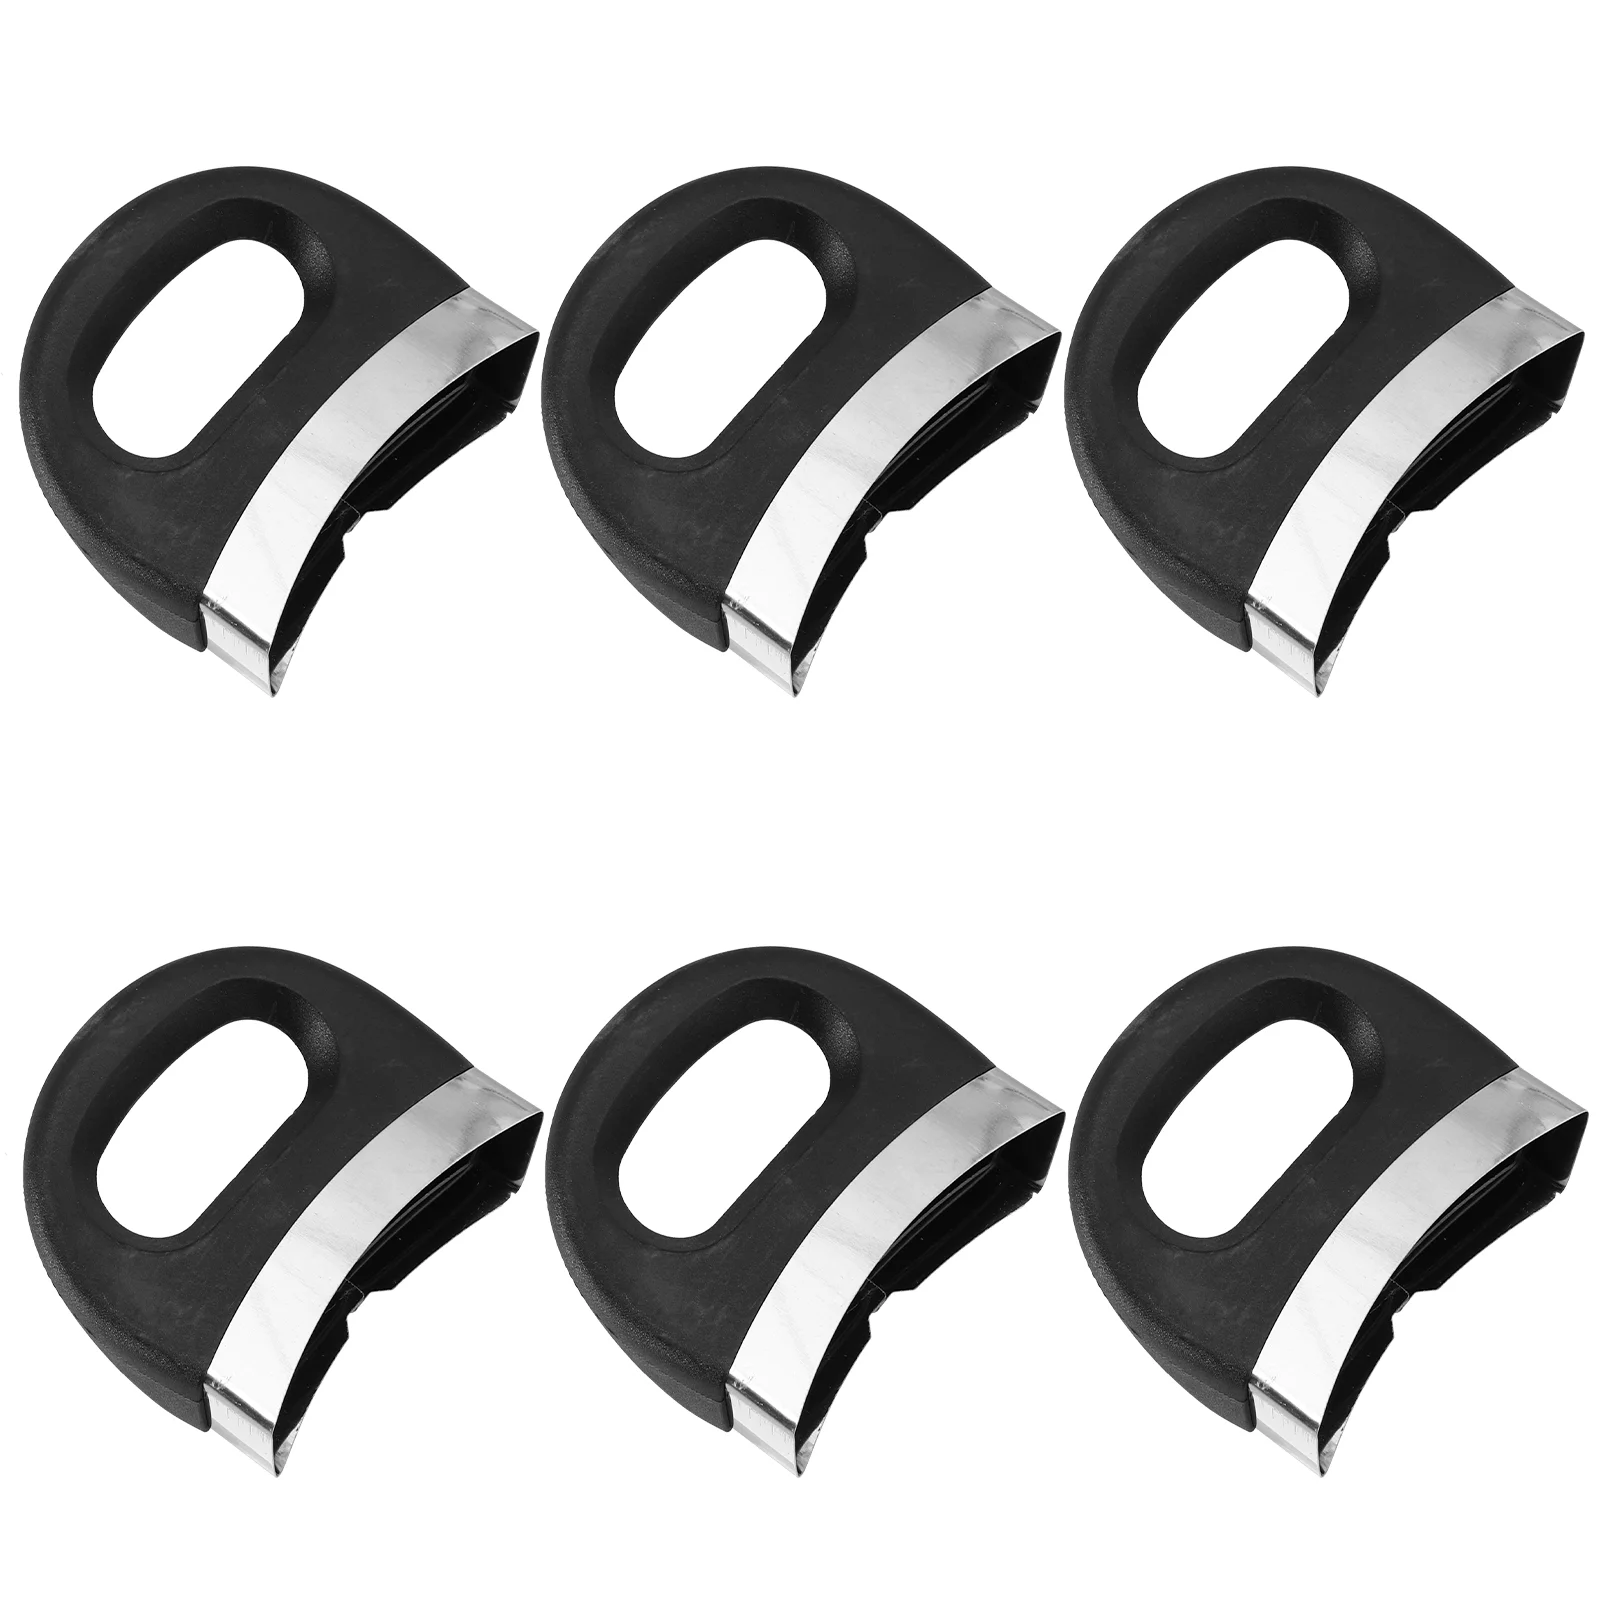 

6pcs Pot Side Ears Soup Pot Side Handles Stainless Steel Pot Accessories